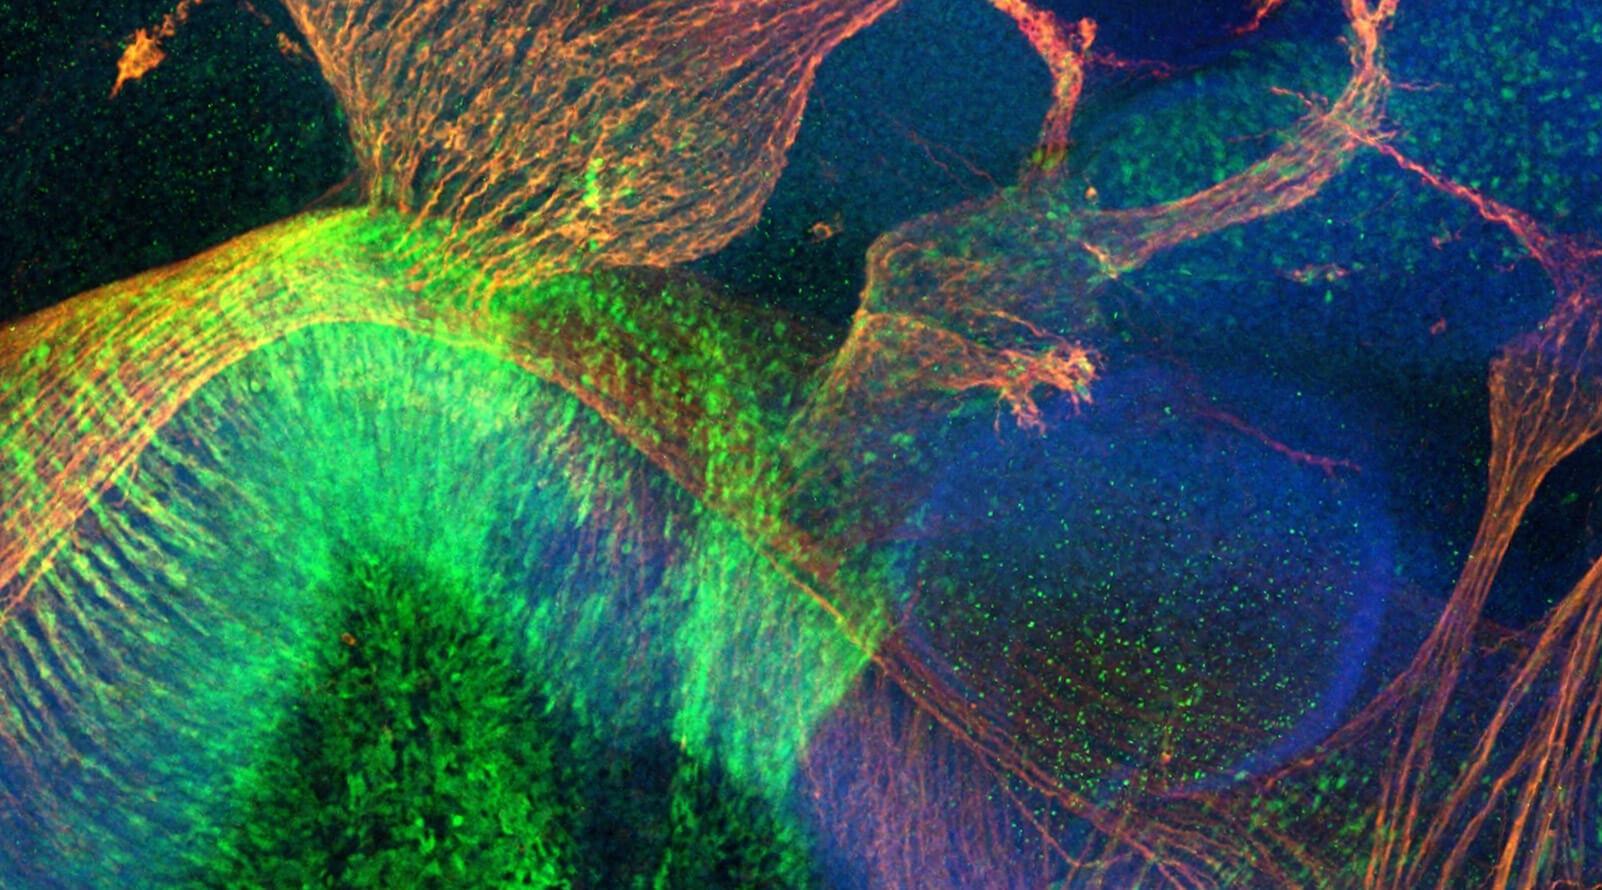 Fluorescent microscopy image